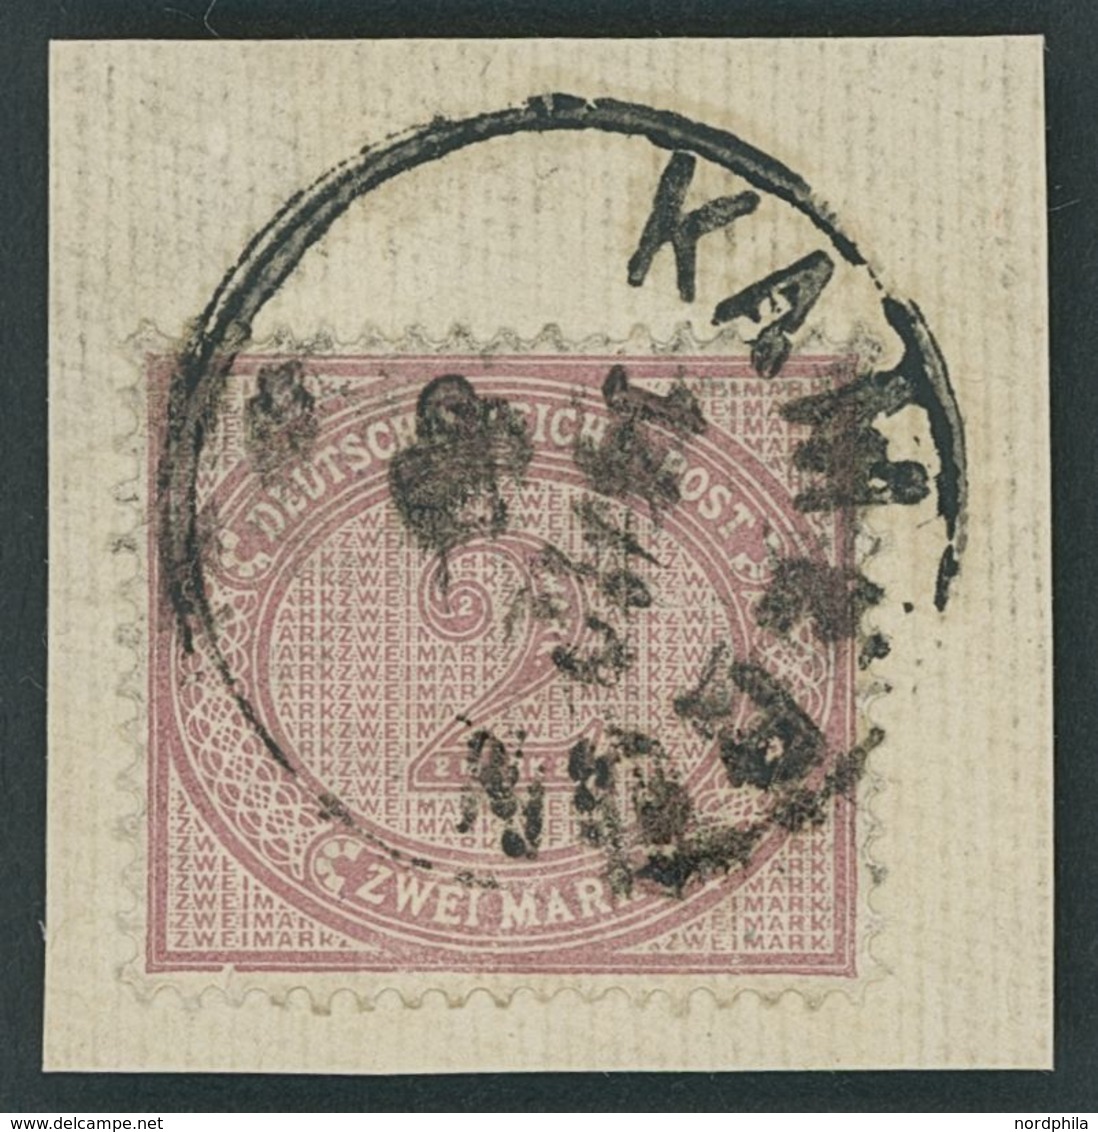 KAMERUN V 37c BrfStk, 1889, 2 M. Mittelrosalila, Stempel KAMERUN Auf Leinenbriefstück, Pracht, R!, Gepr. W. Engel - Camerún